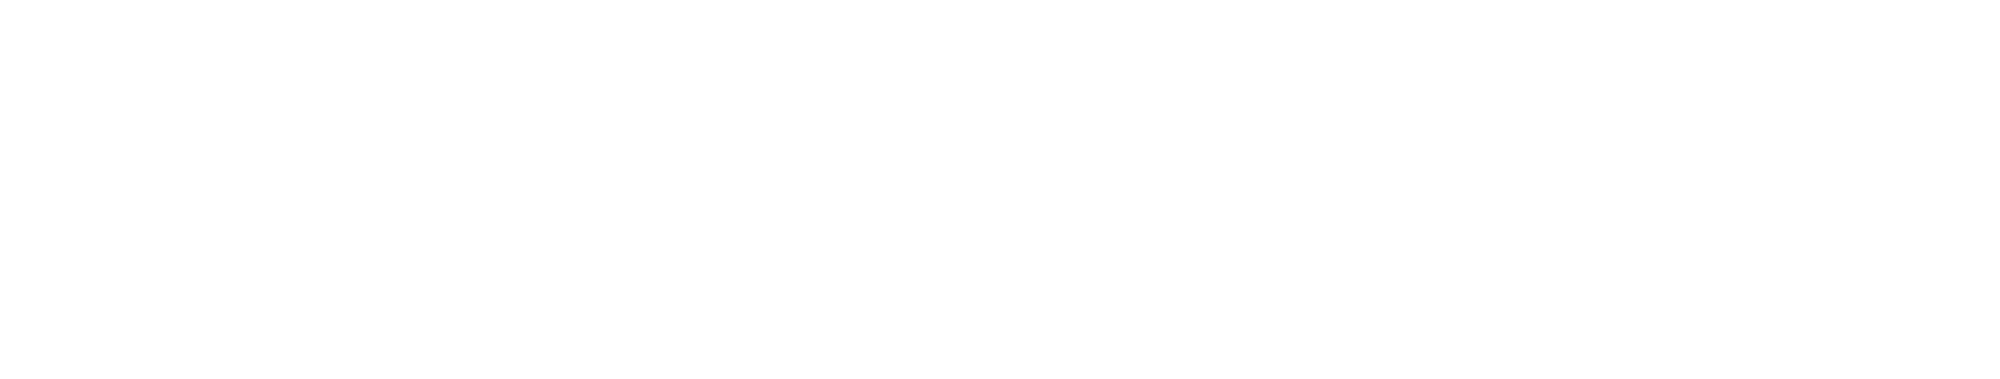 Wild Brook Coaching 